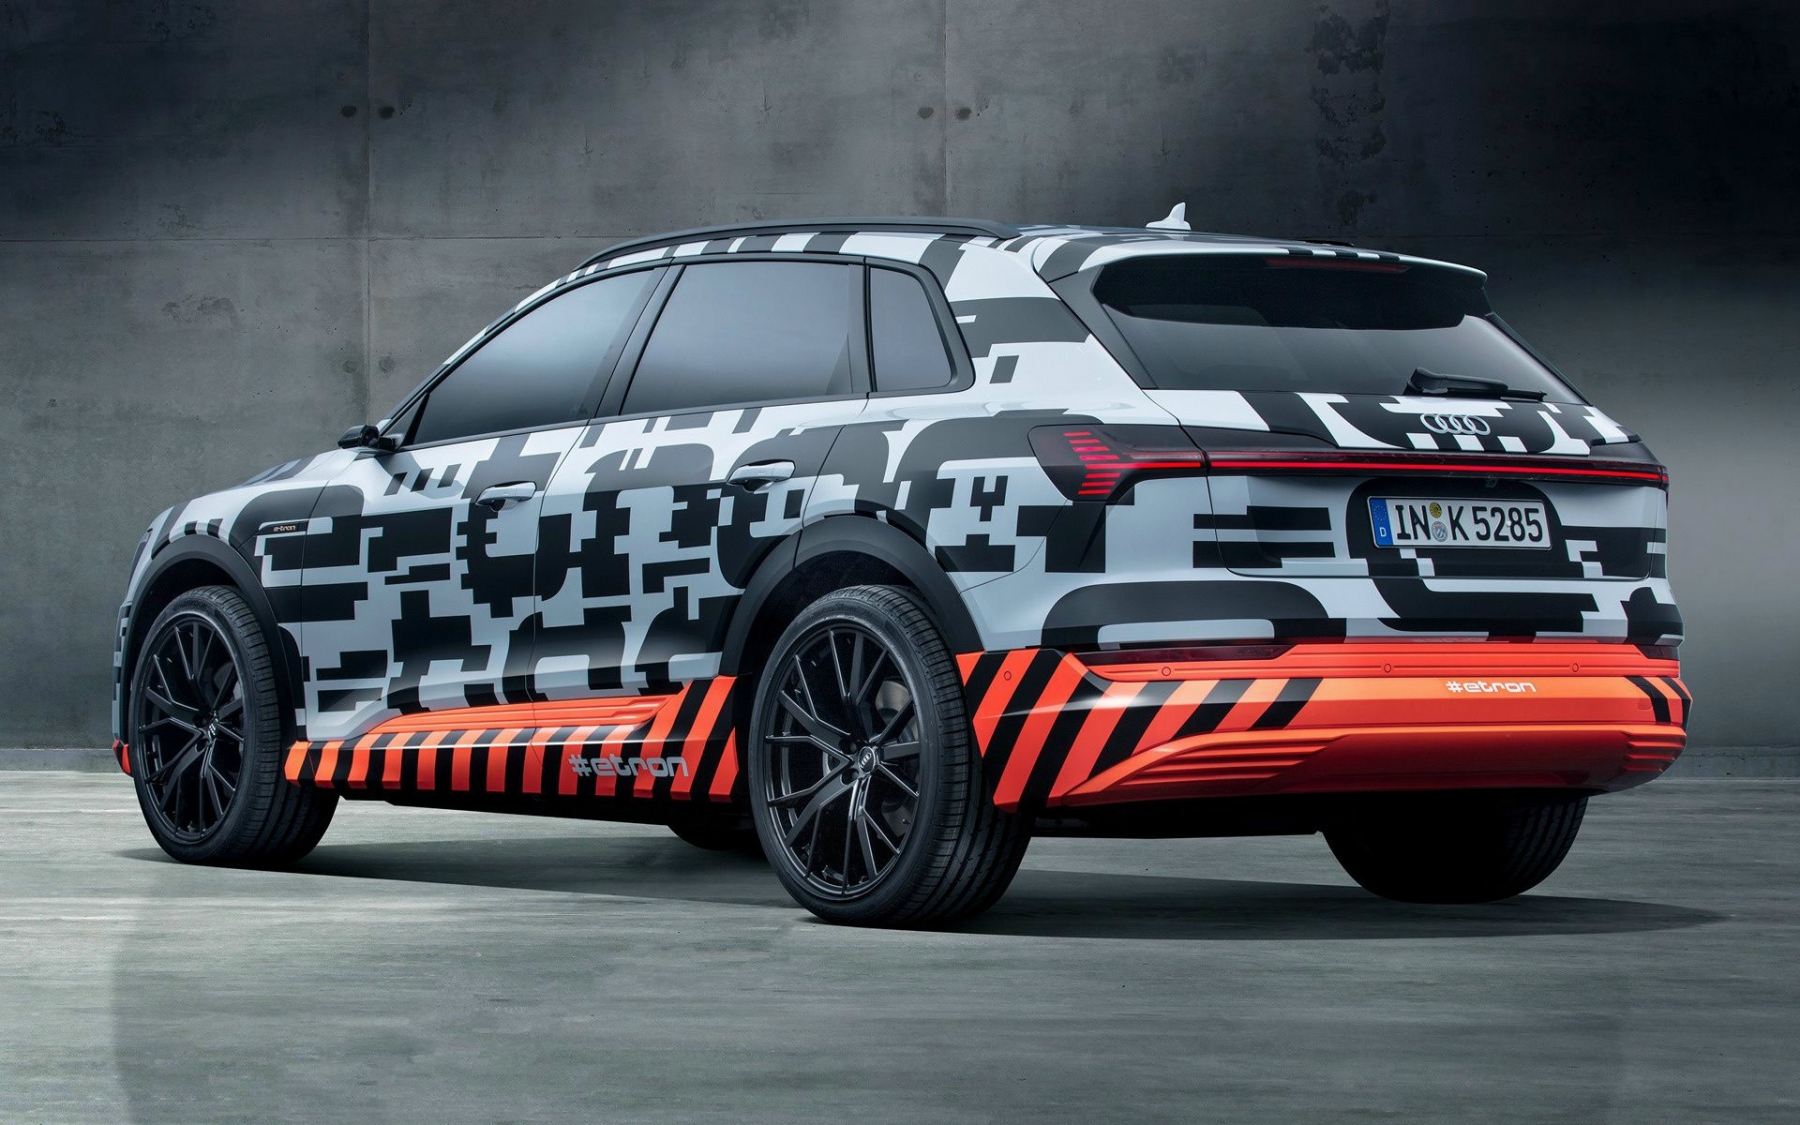 Audi E-Tron Wallpapers